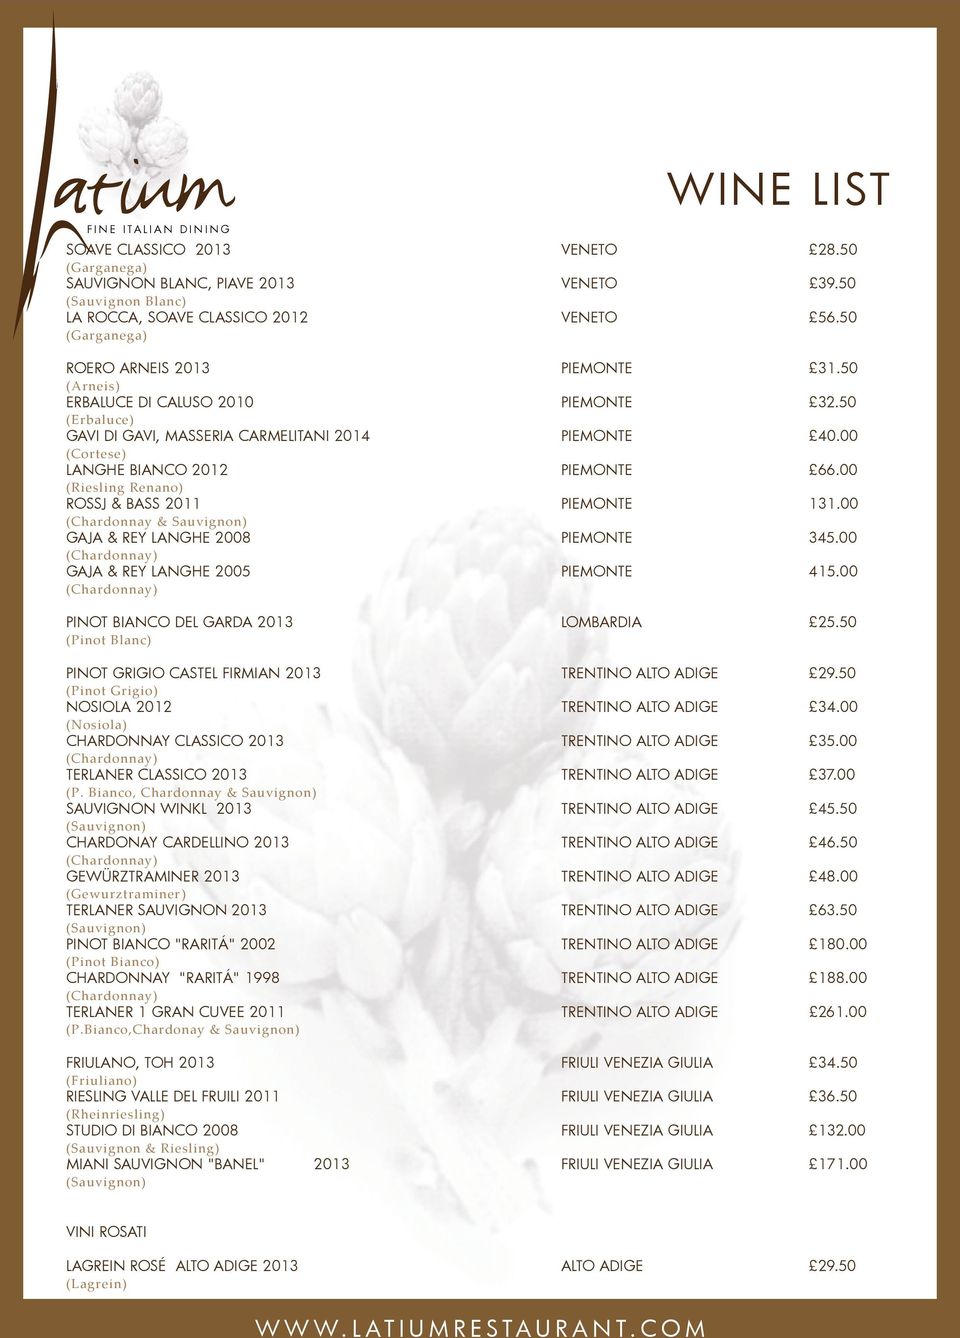 00 (Cortese) LANGHE BIANCO 2012 PIEMONTE 0 566.00 (Riesling Renano) ROSSJ & BASS 2011 PIEMONTE 131.00 (Chardonnay & Sauvignon) GAJA & REY LANGHE 2008 PIEMONTE 345.